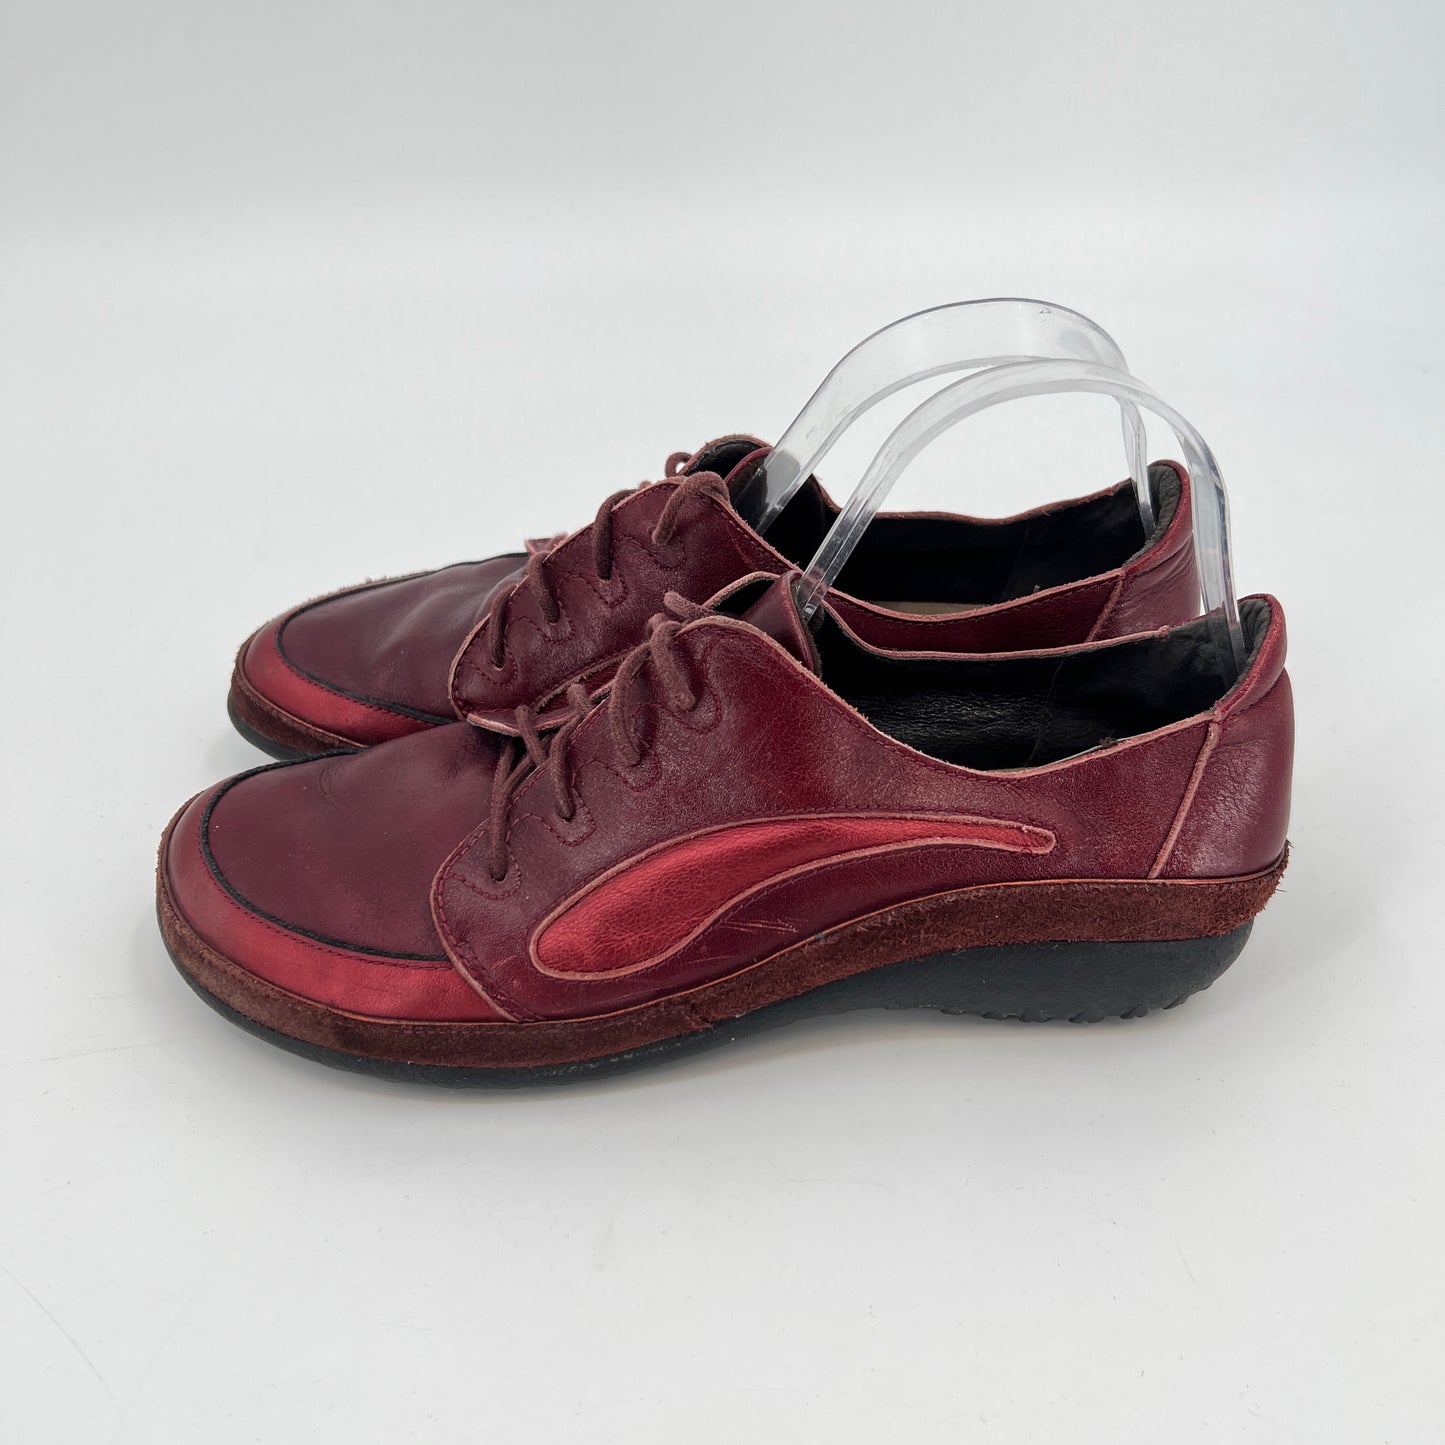 Naot Leather Lace Shoes 41EU/9-9.5 US